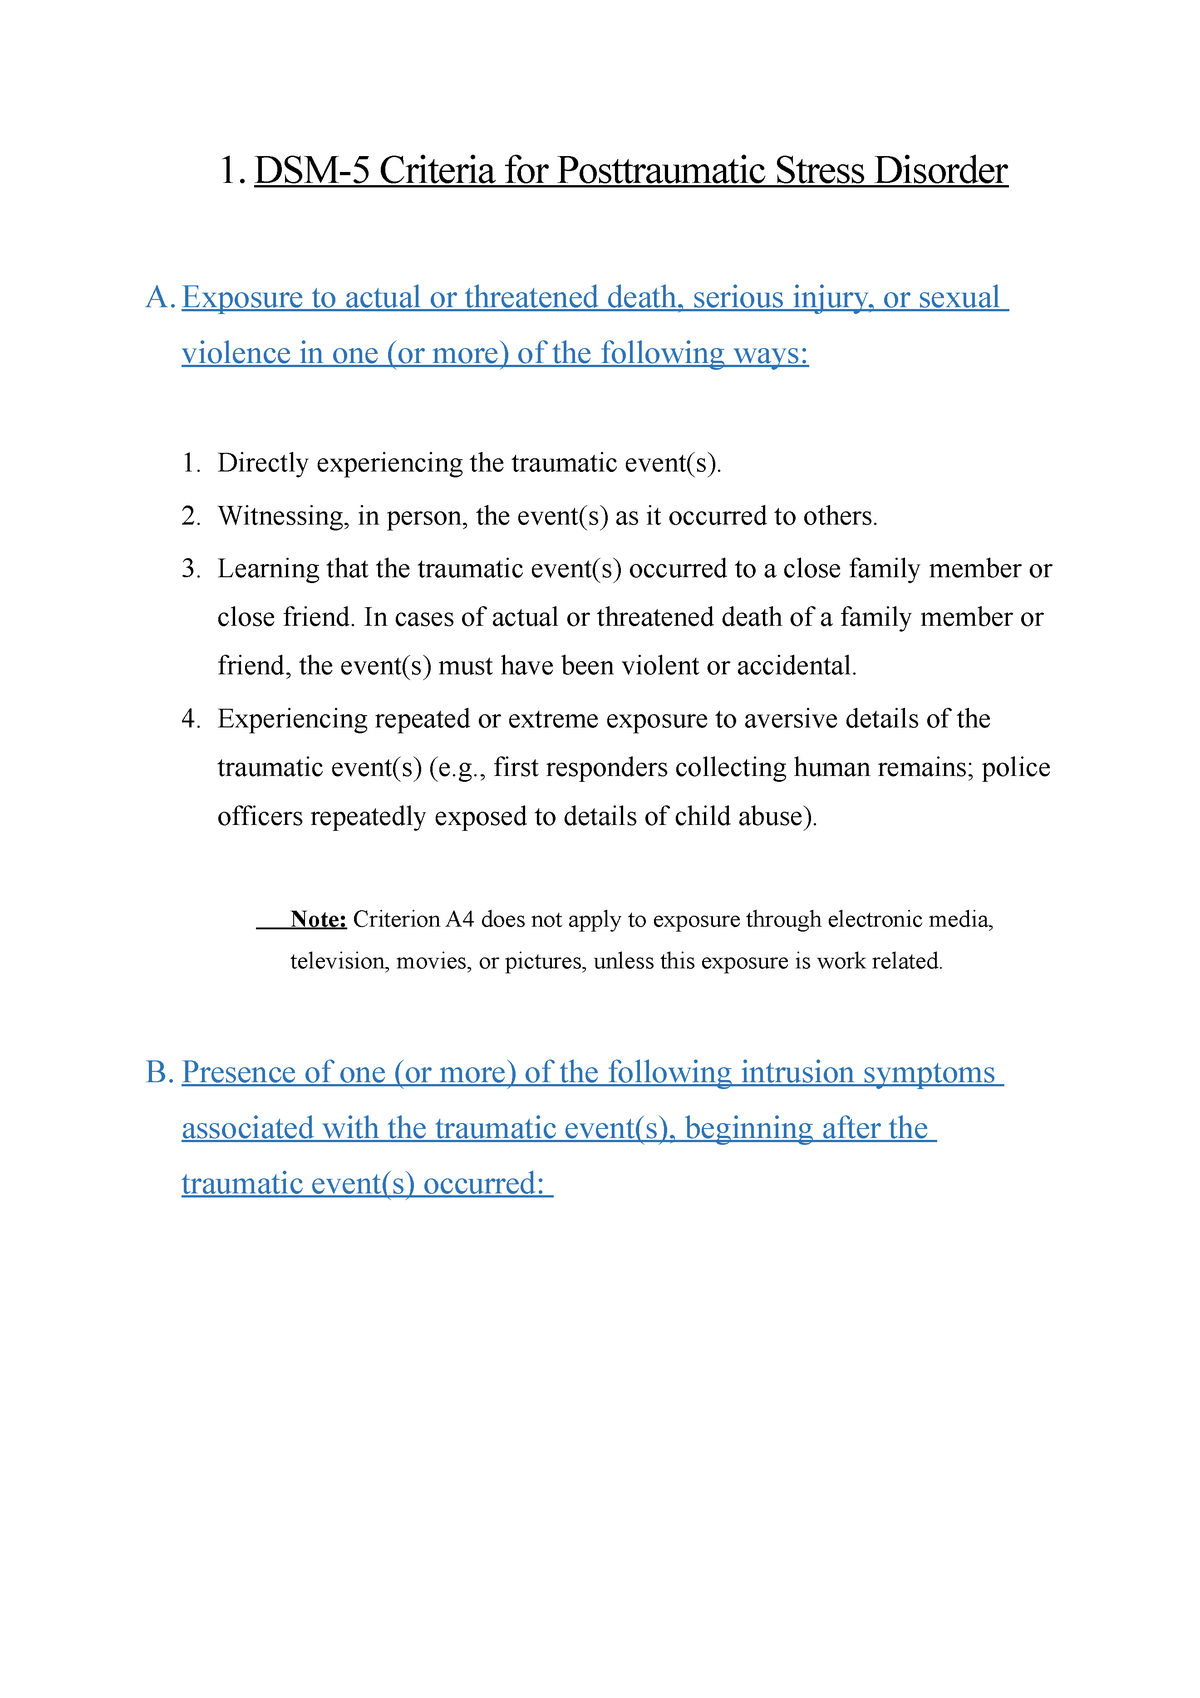 dsm 5 criteria for ptsd pdf